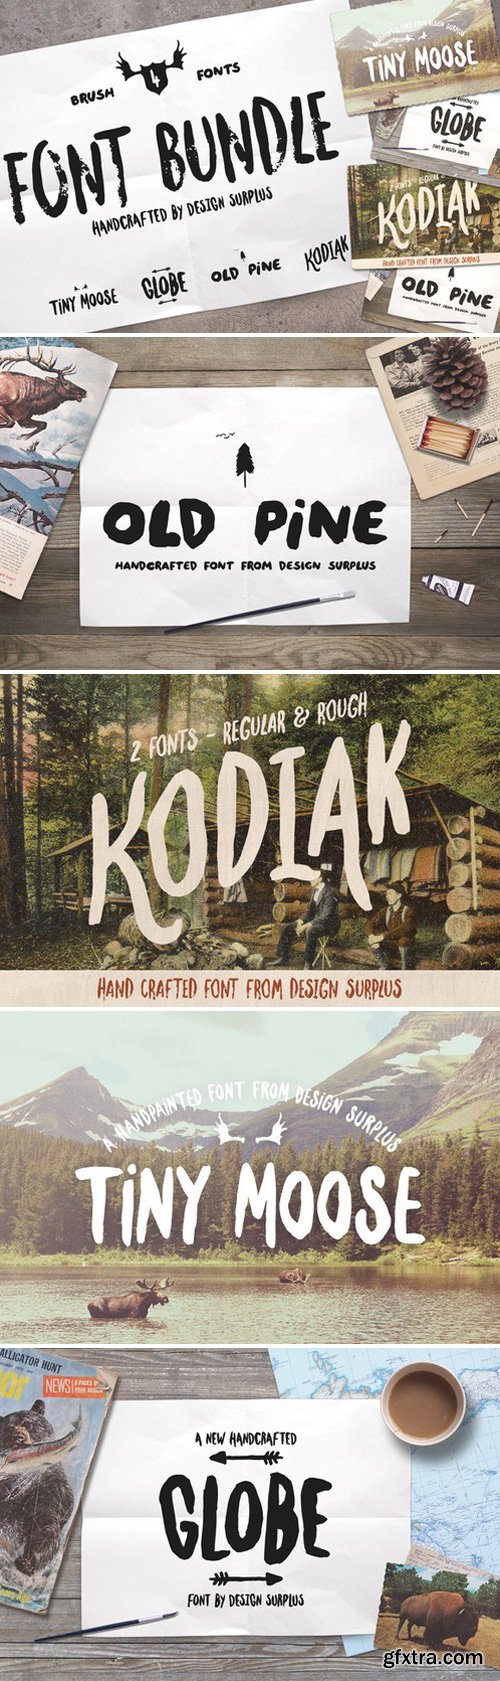 CM - Font Bundle Tiny Moose Old Pine & Old Pine Extras Globe Kodiak Regular & Kodiak Rough 279235